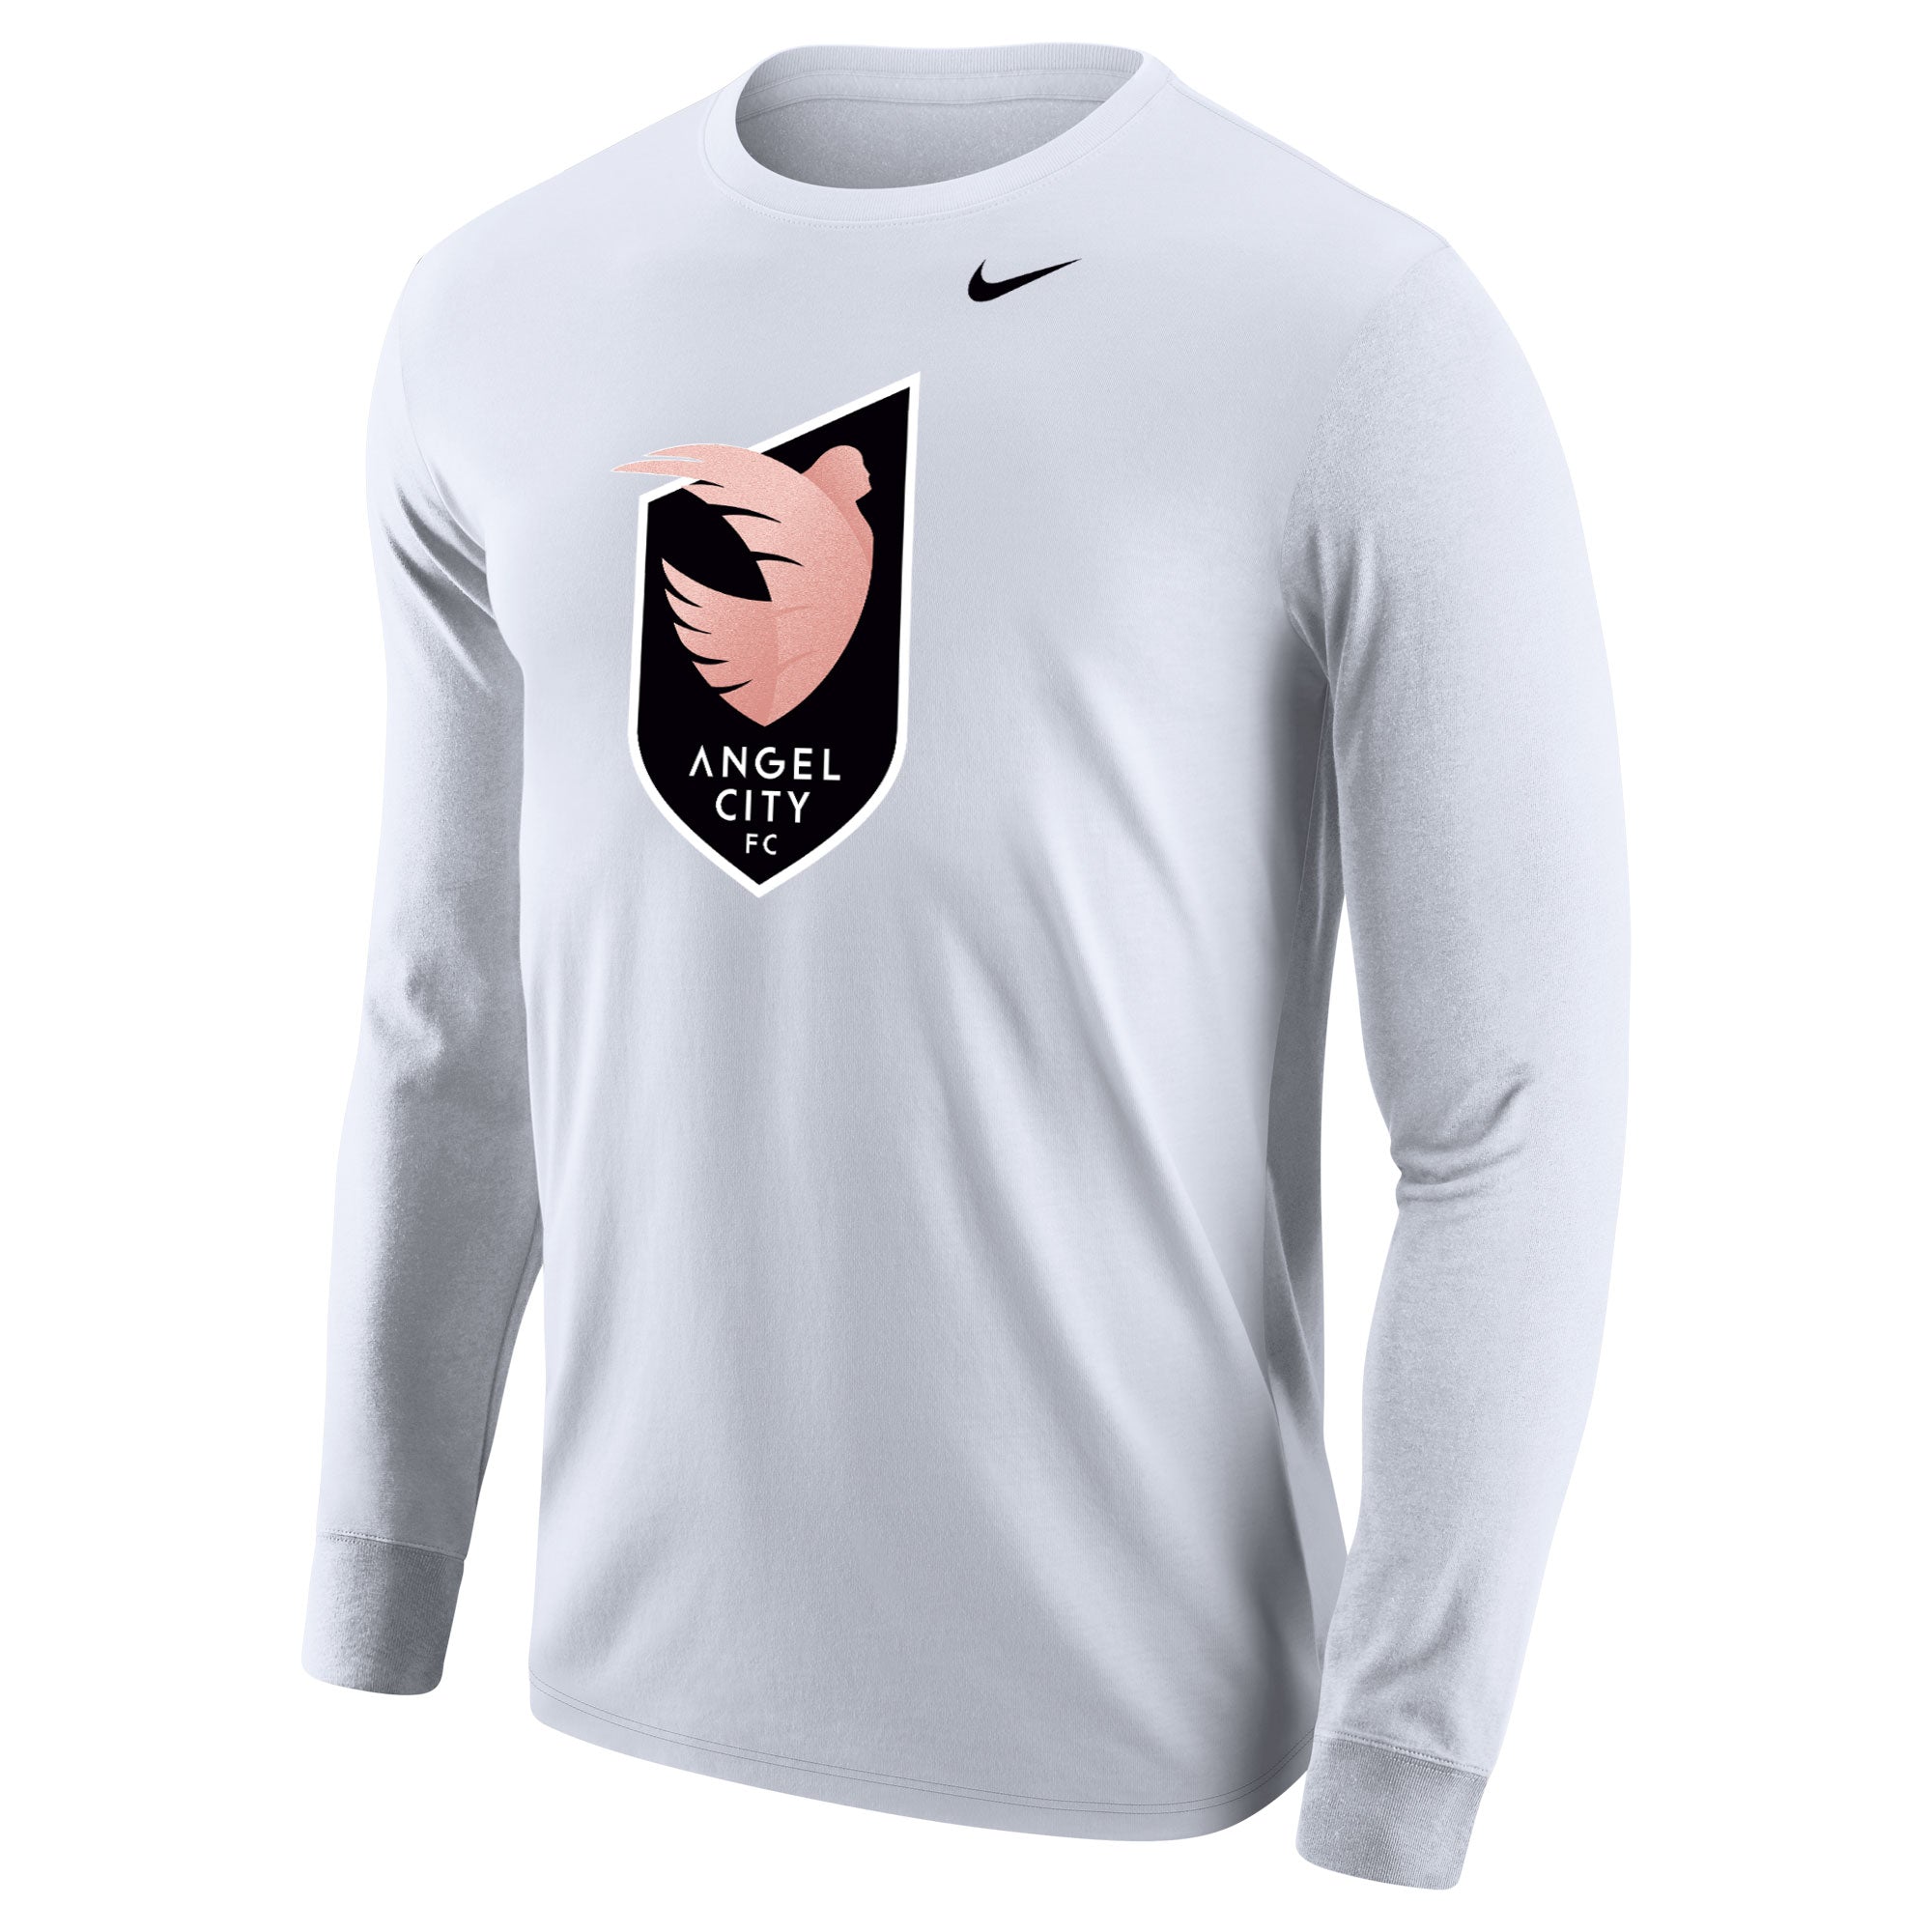 Angel City FC Nike Unisex Sol Rosa Crest camiseta blanca de manga larga